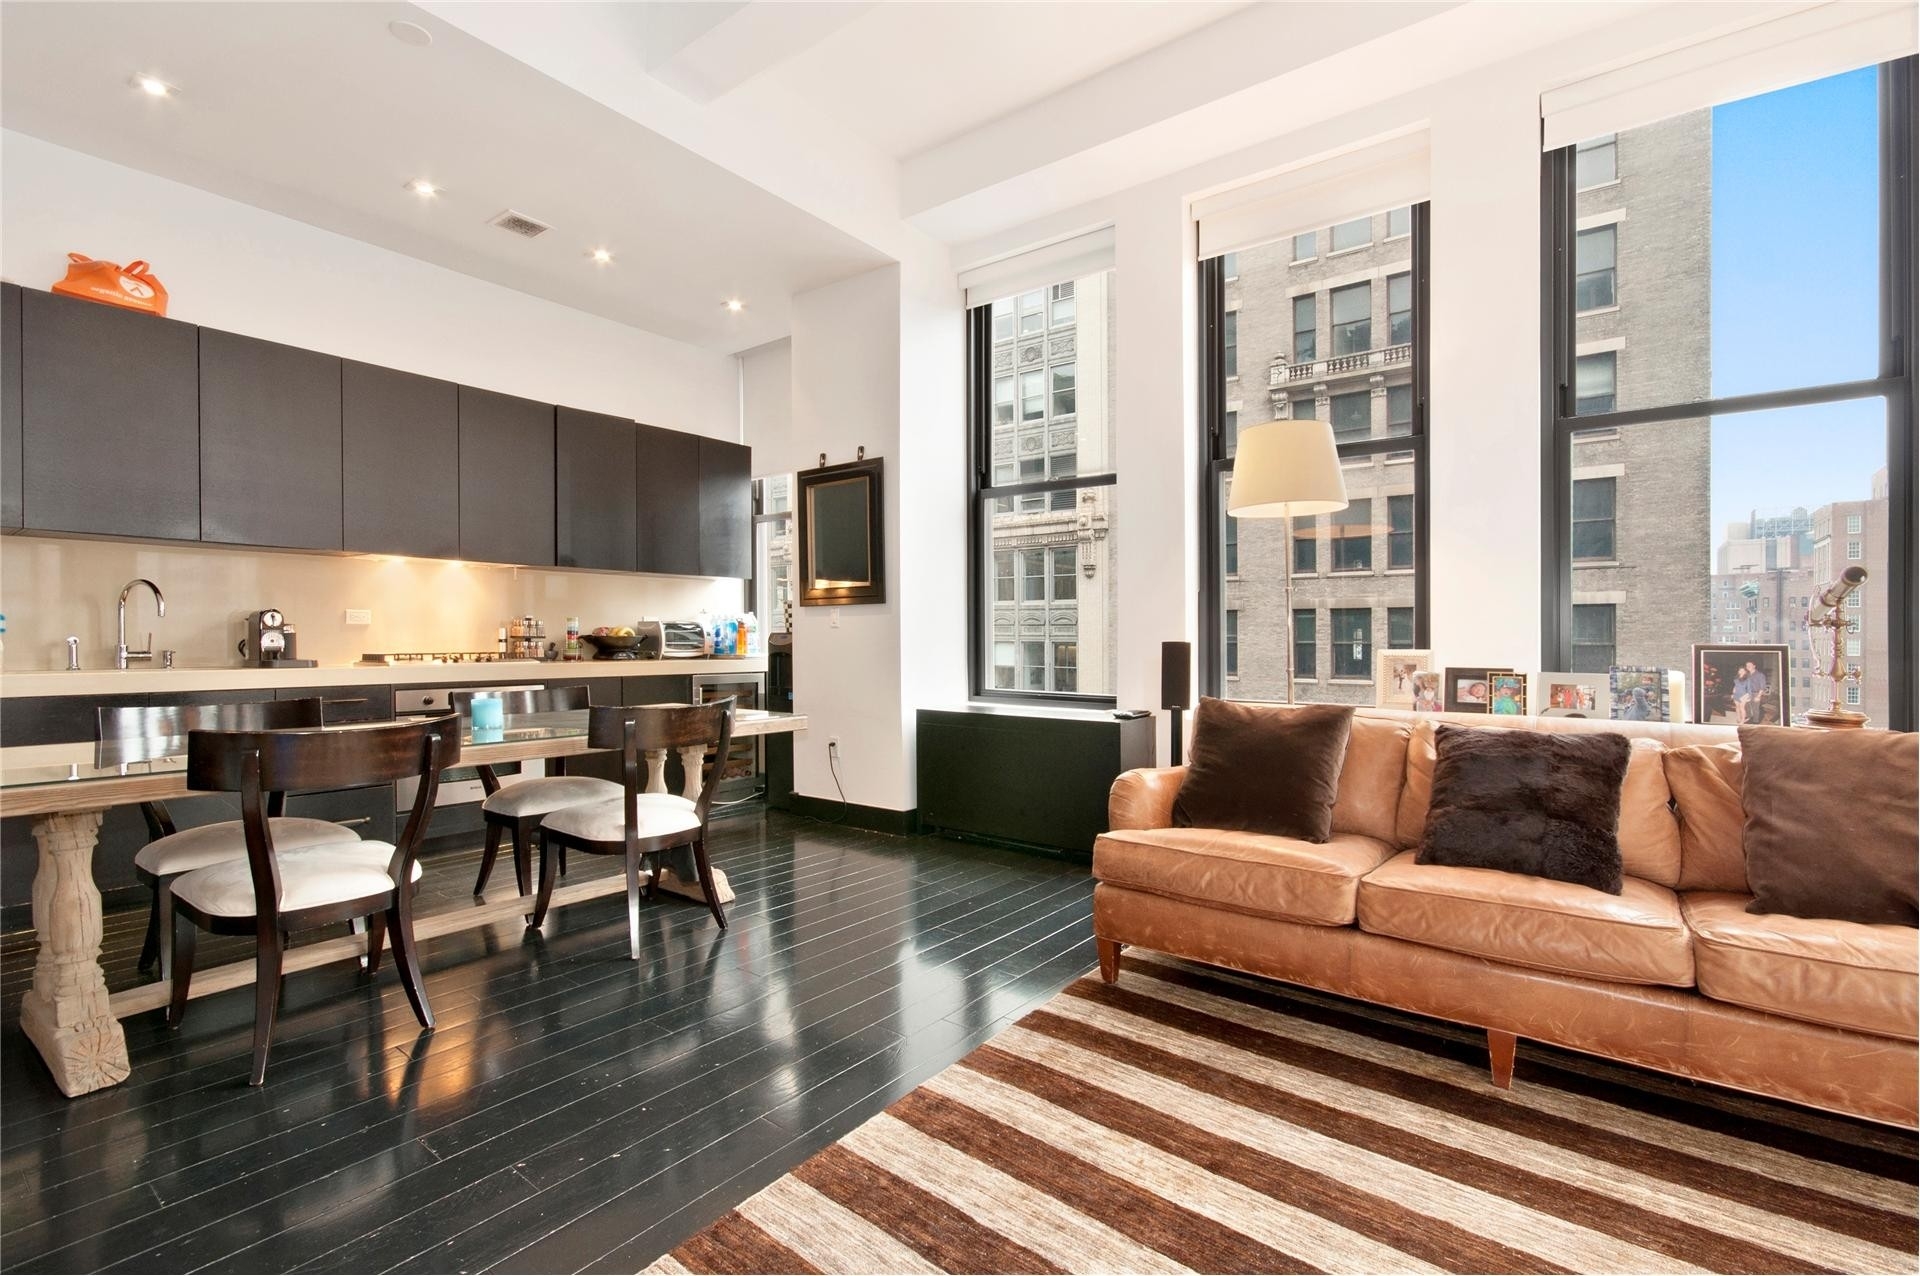 Condominium at 254 Park Avenue South, 9D New York